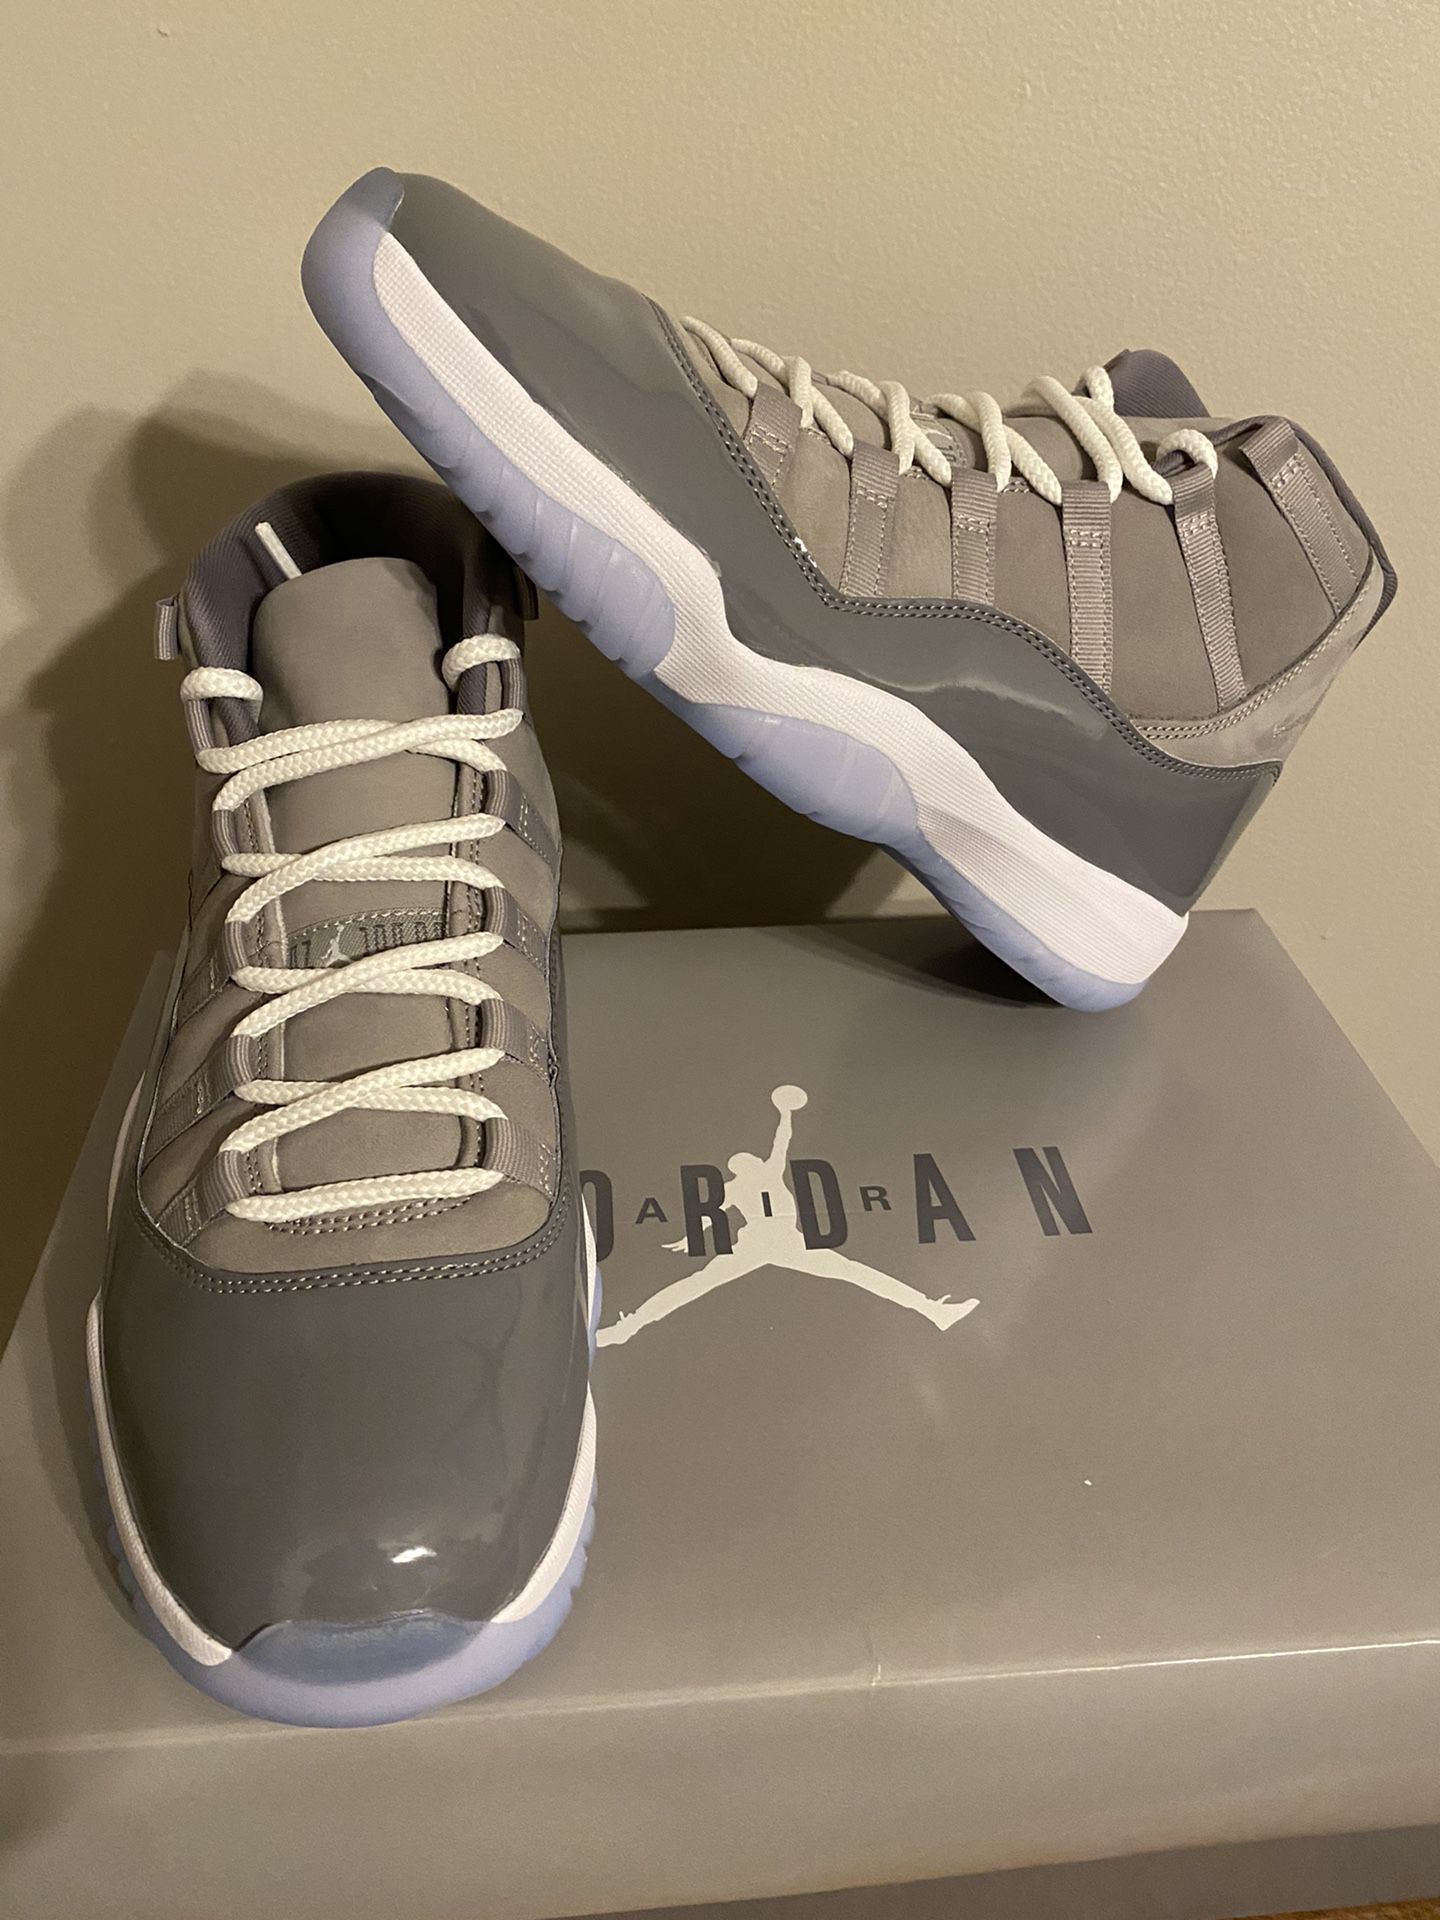 Jordan 11 Cool Grey Size10